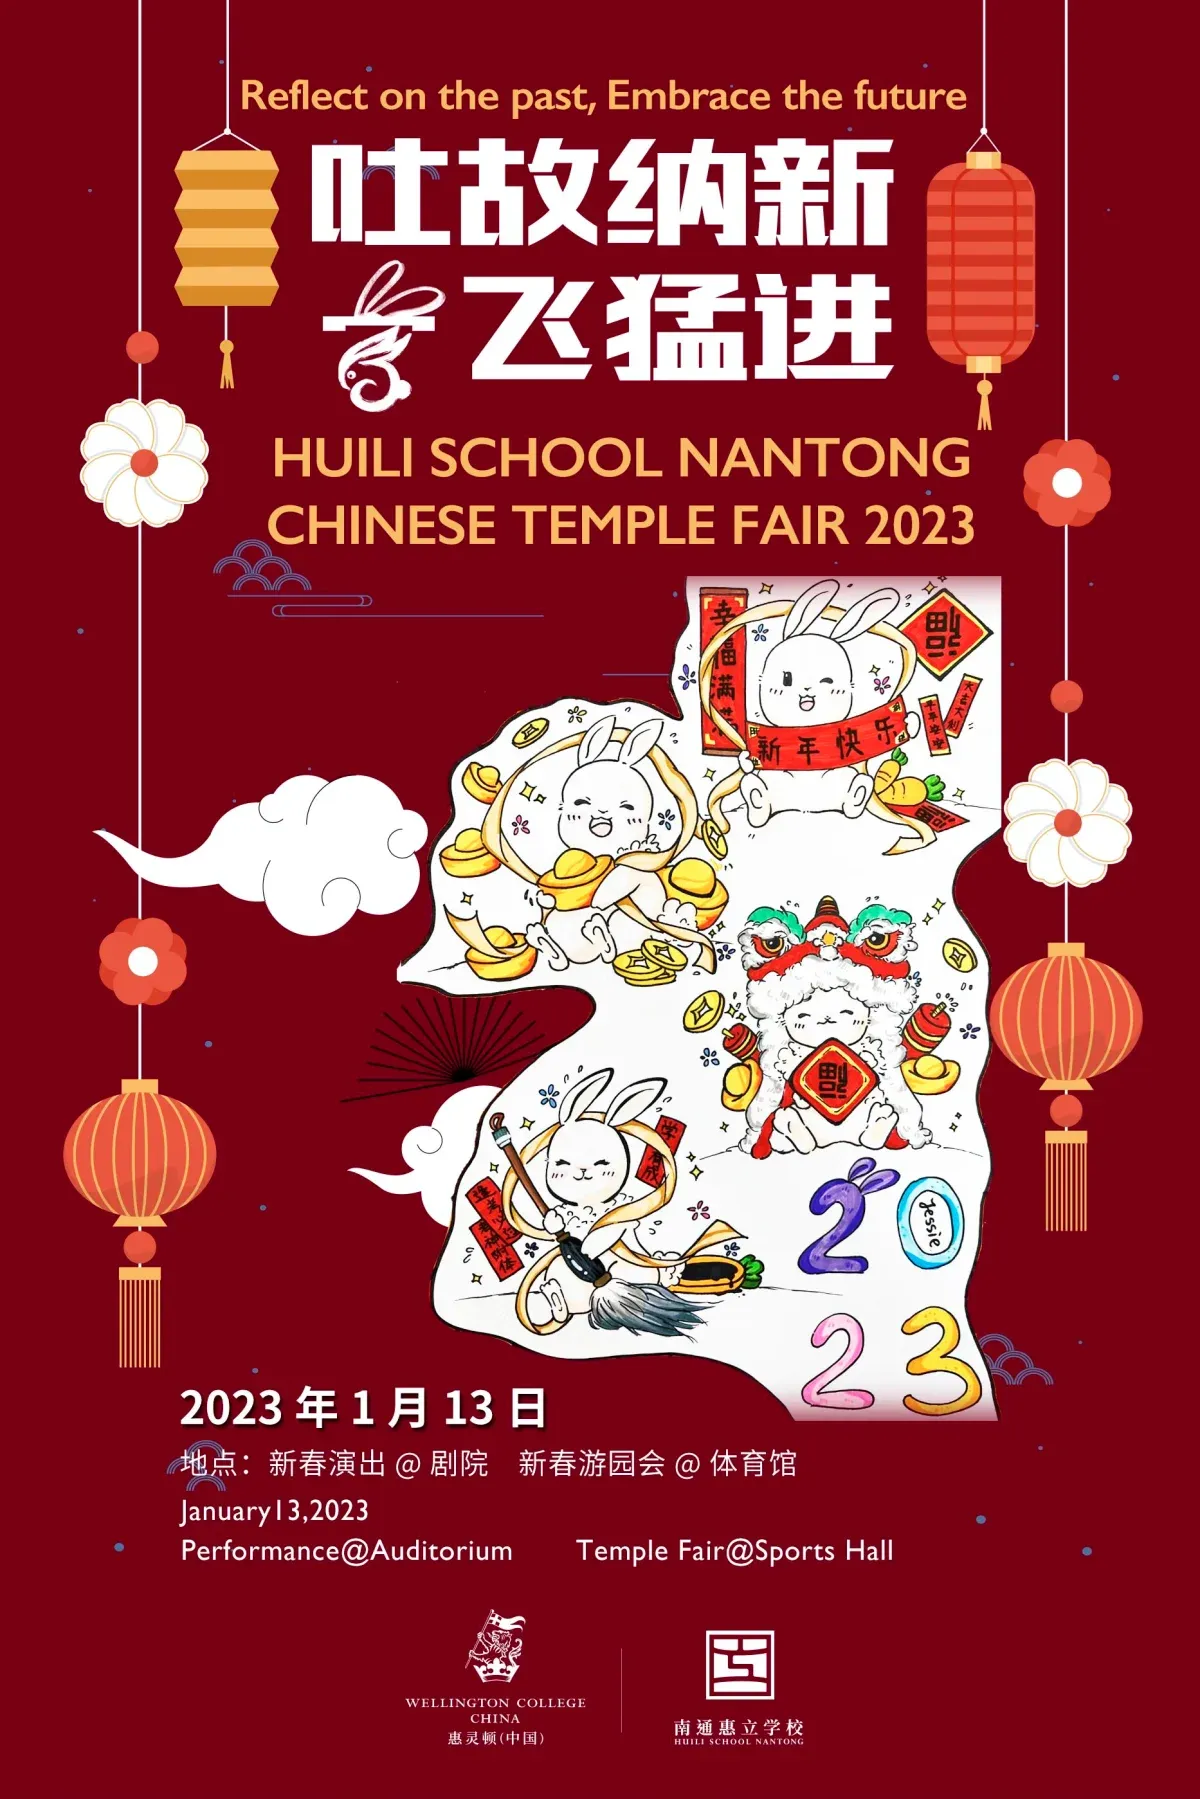 Huili School Nantong Chinese New Year Temple Fair